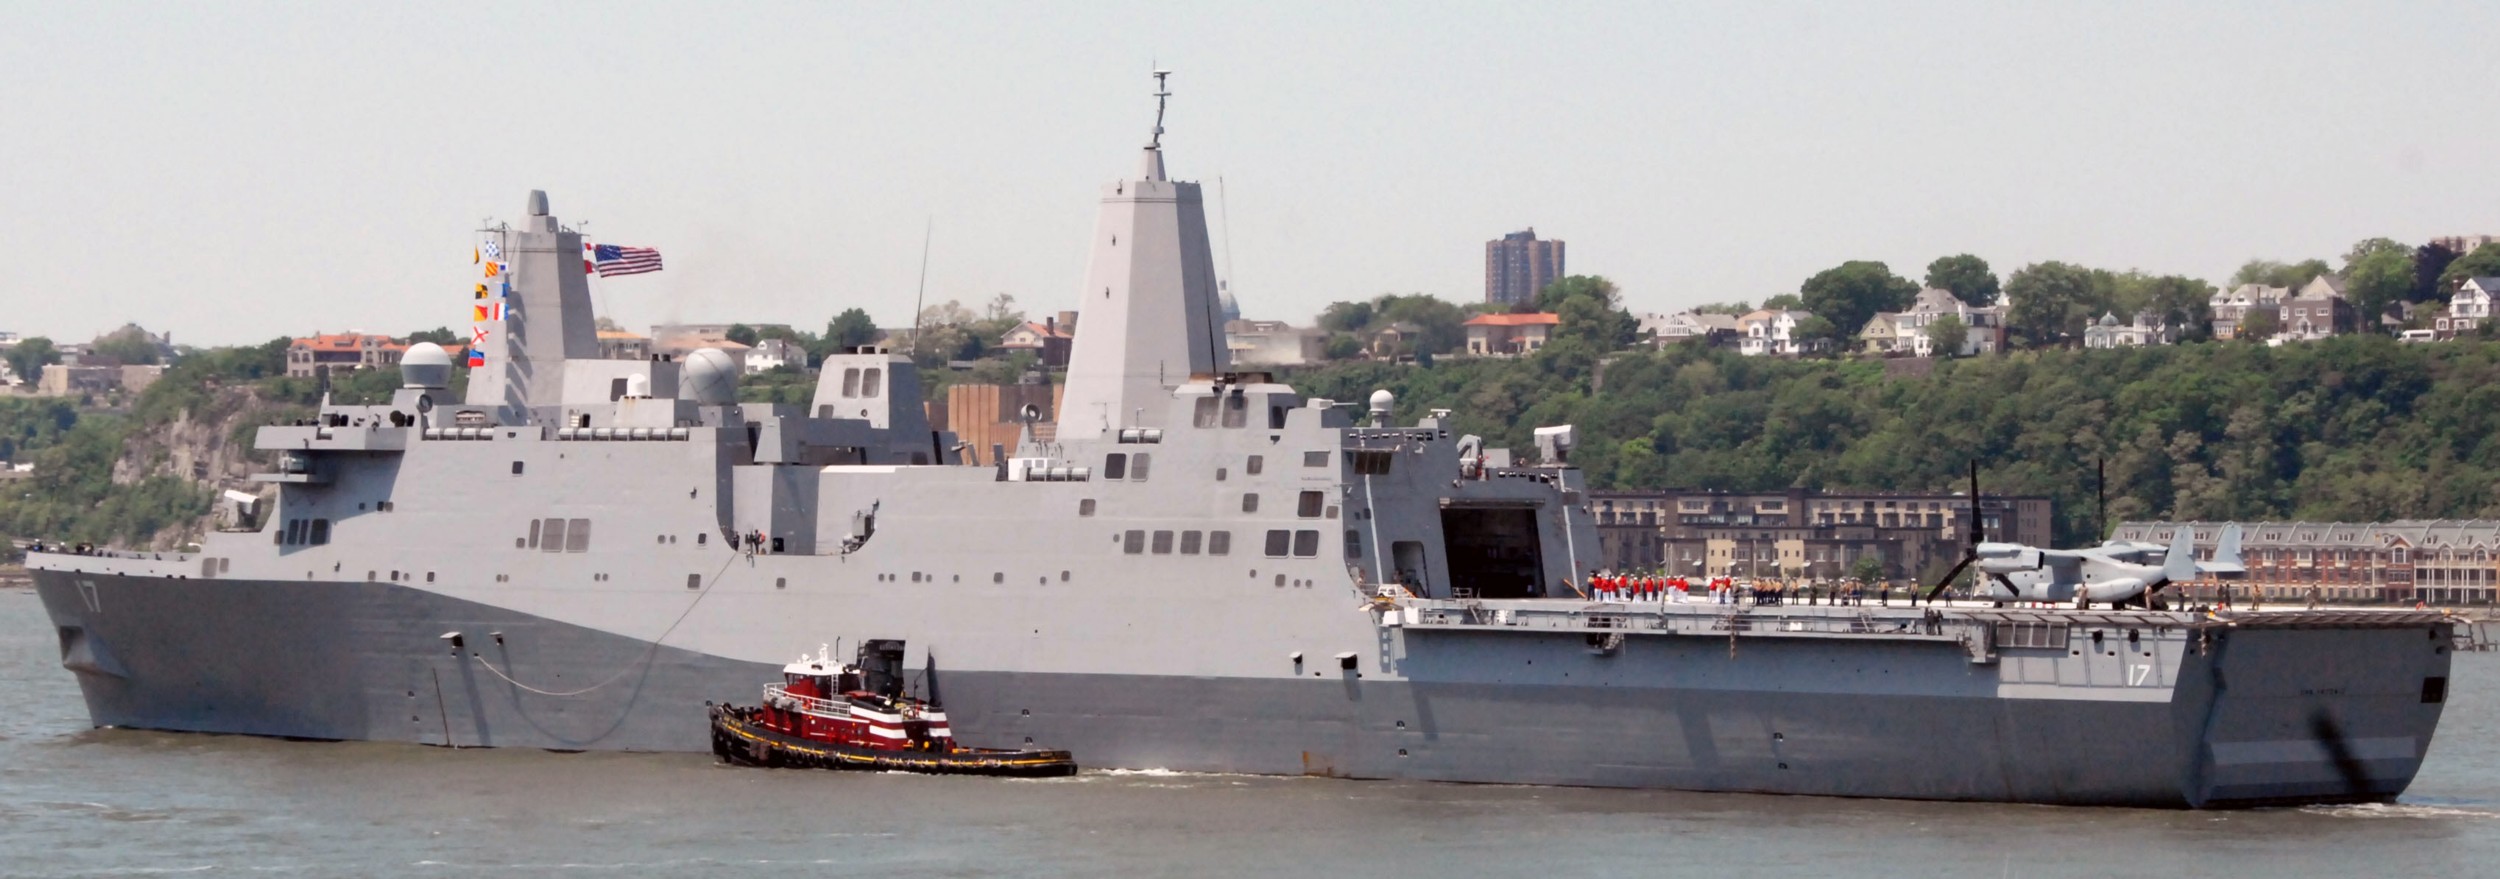 lpd-17 uss san antonio amphibious transport dock landing ship us navy new york fleet week 83